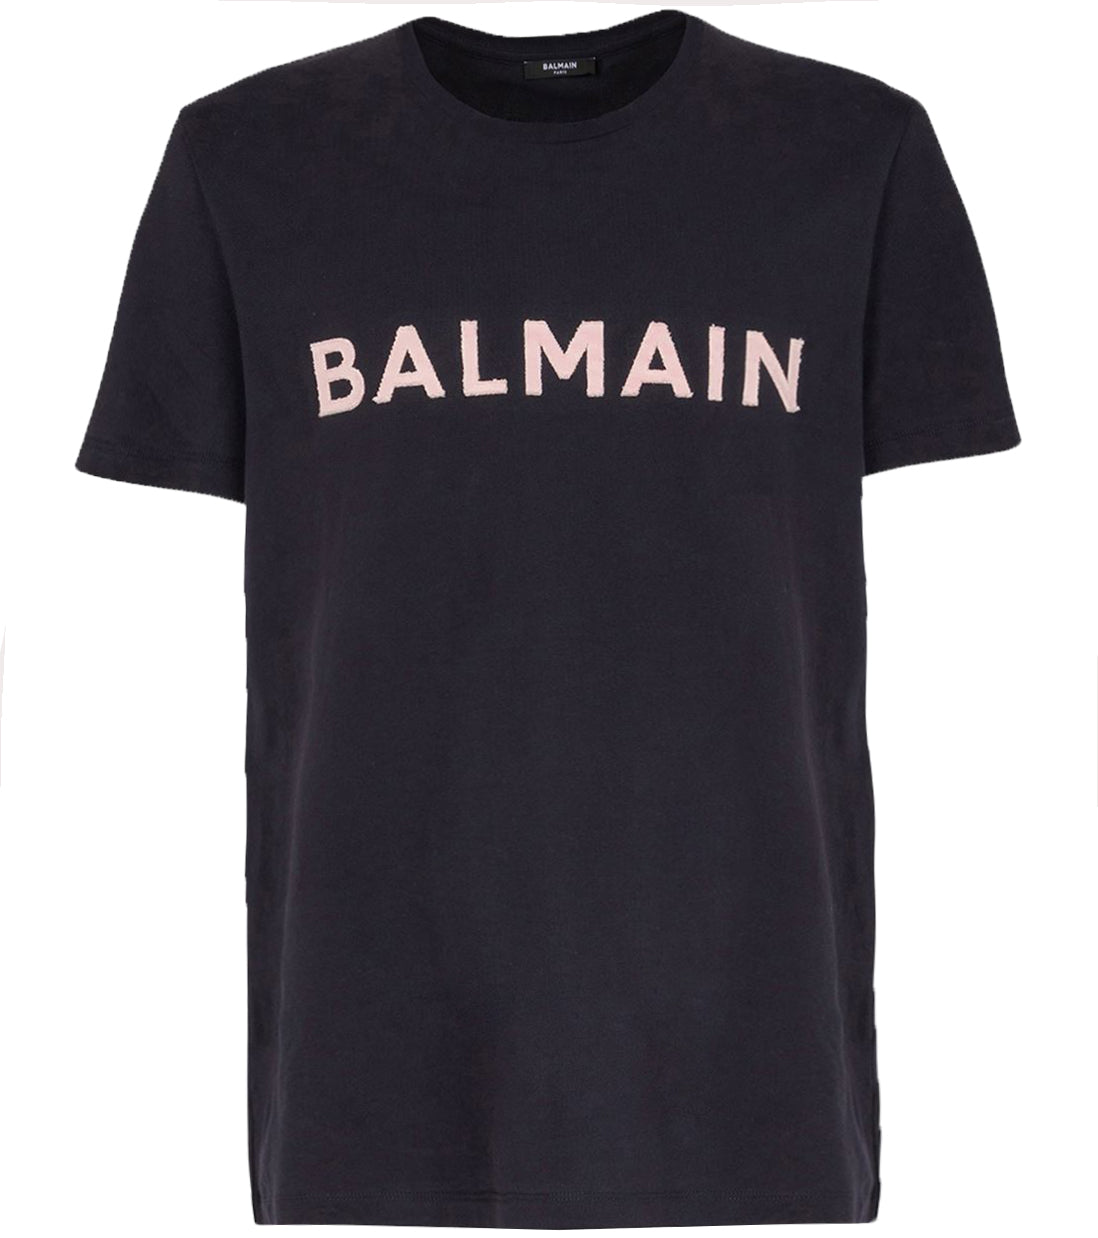 Balmain Logo Tee - Light Black/Navy& Pink